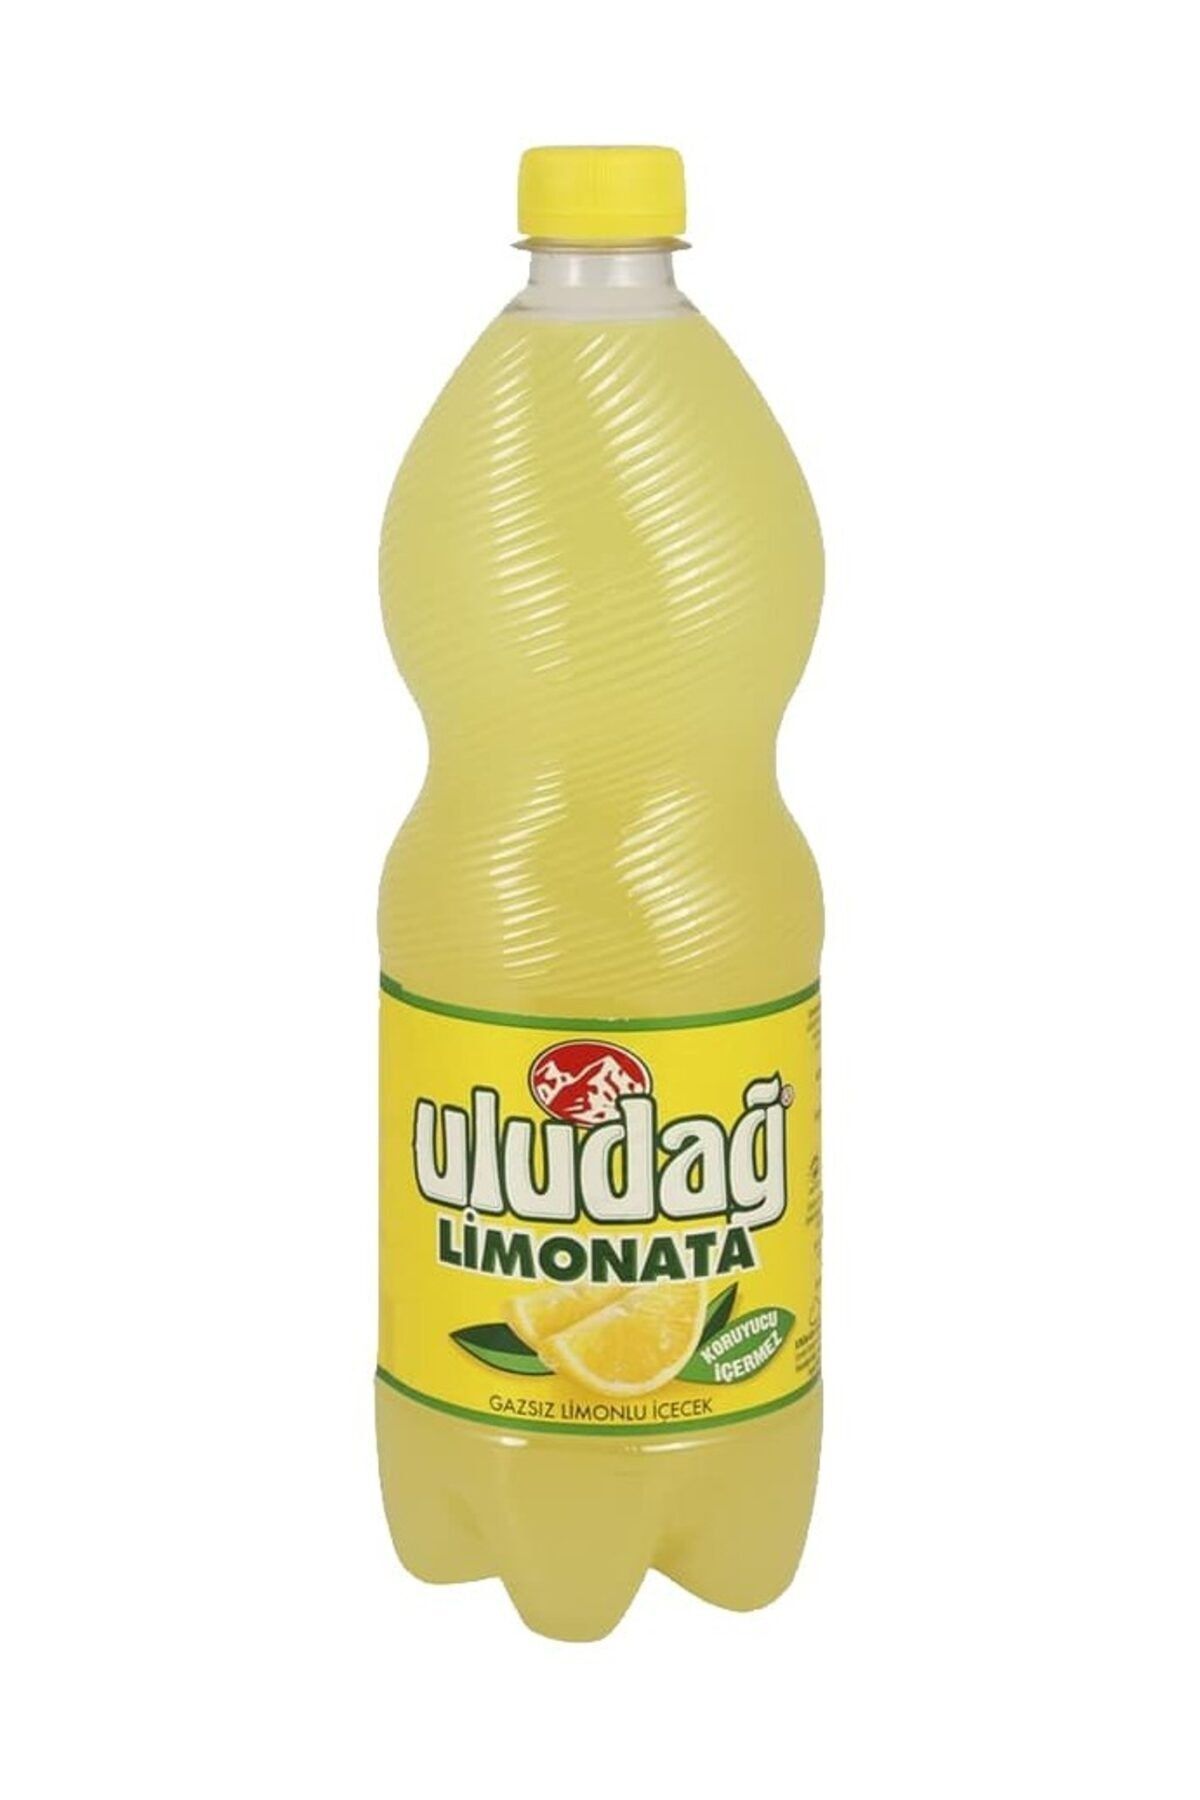 Uludağ Limonata Pet Şişe 1 lt